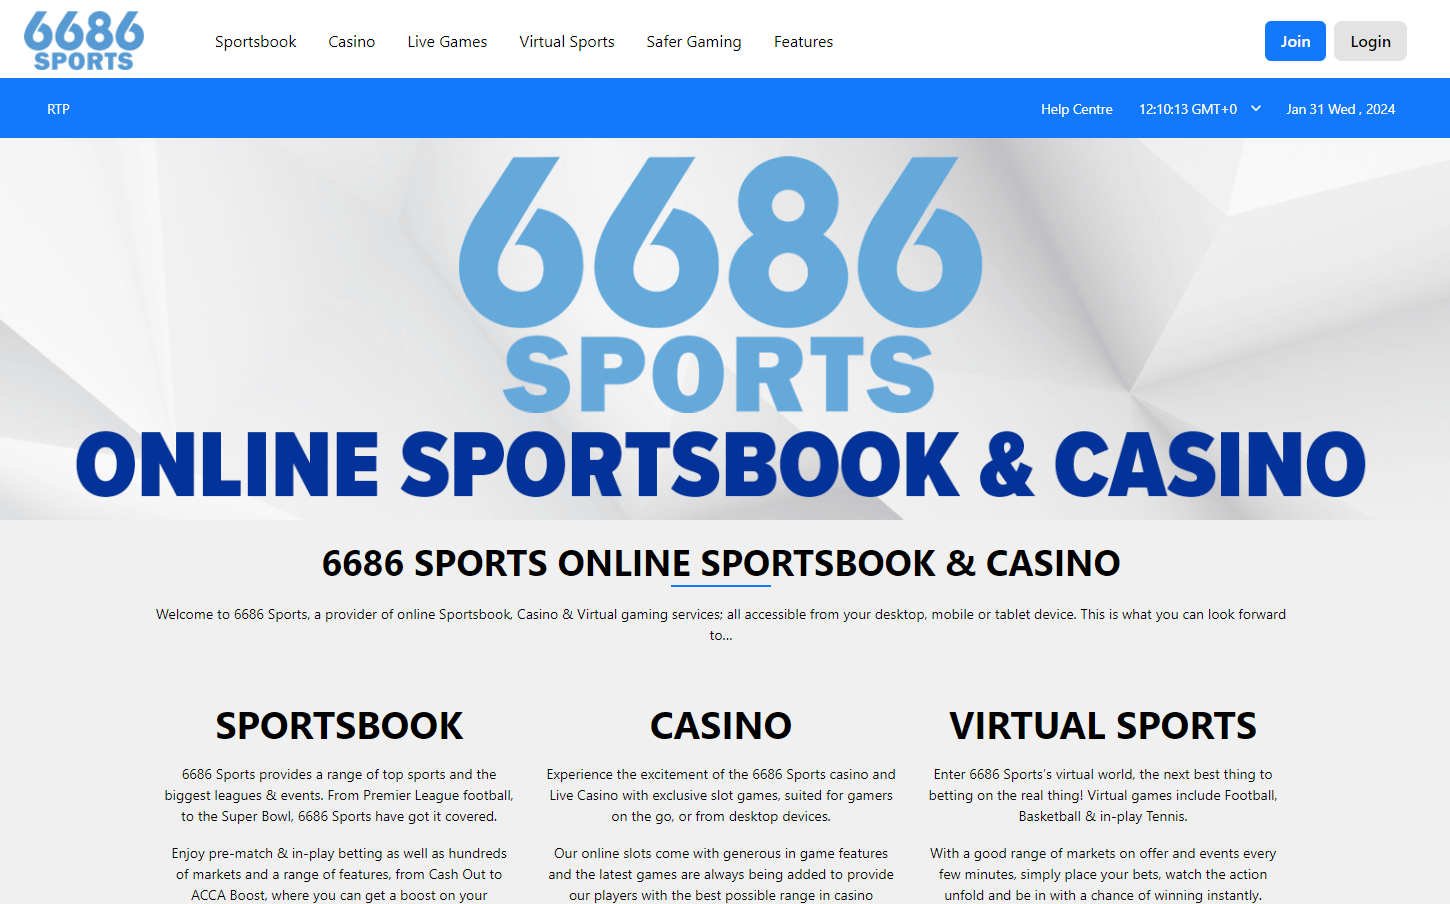 6686sports website